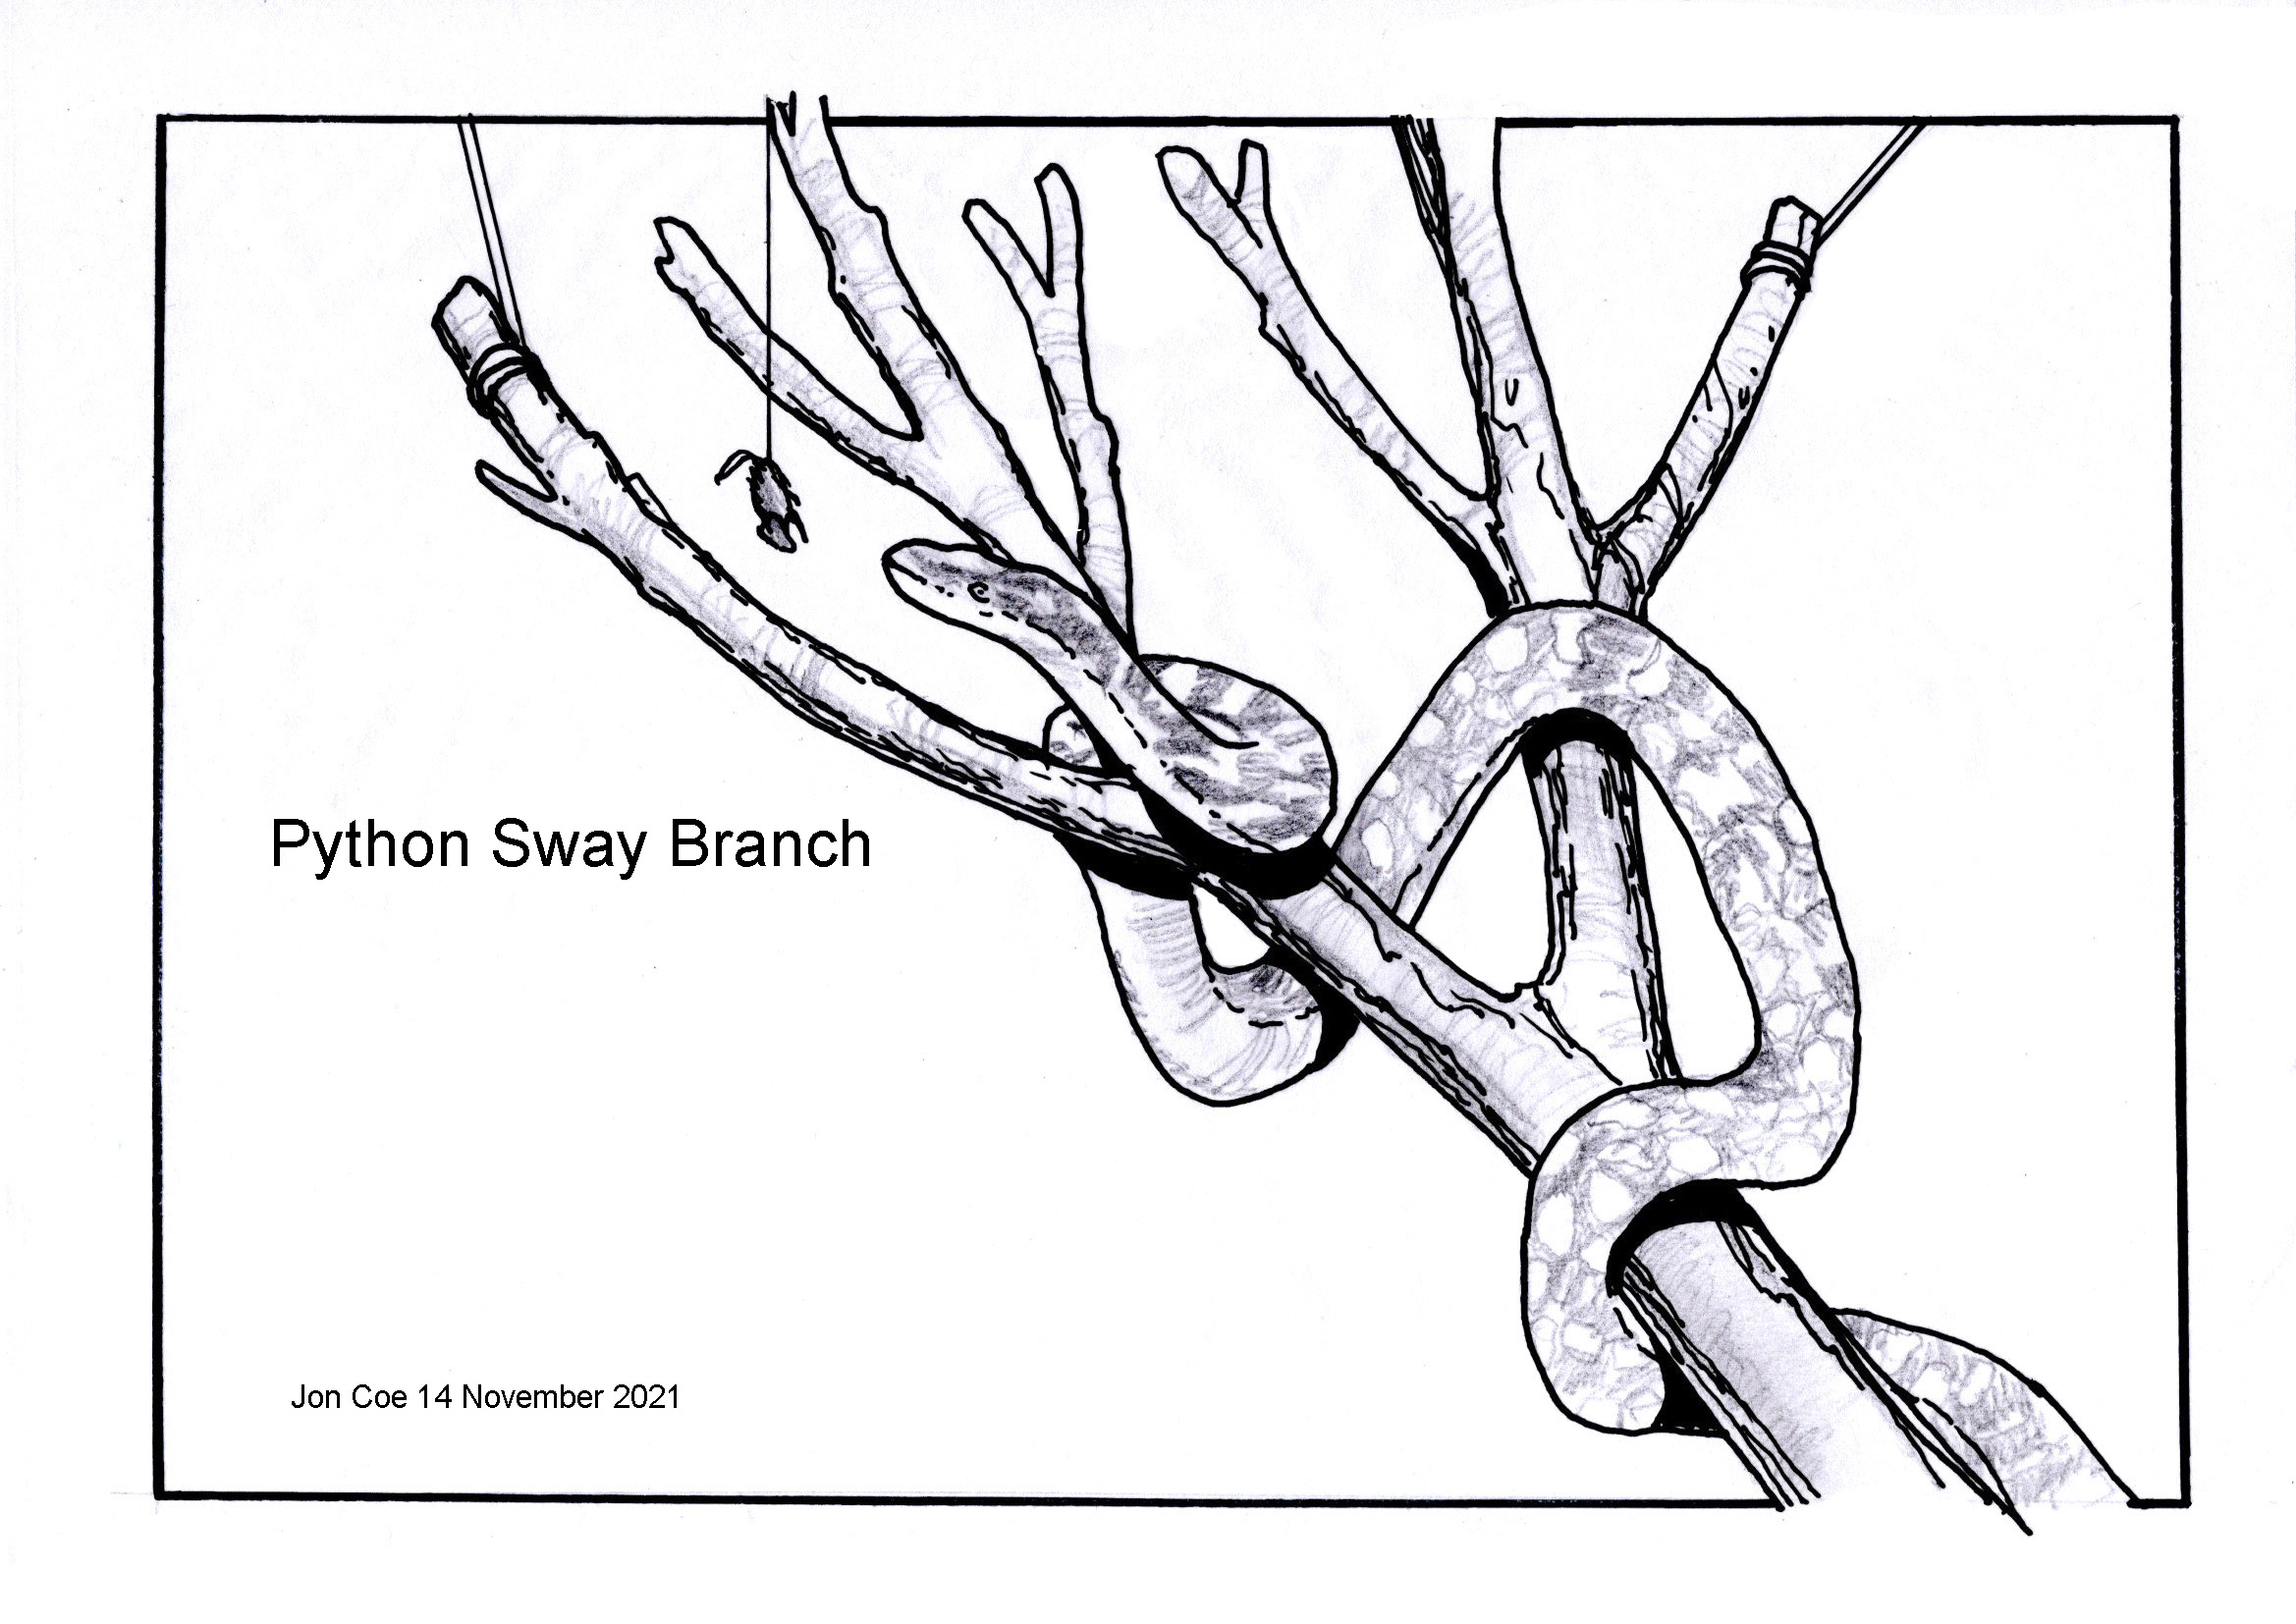 Python on swaying branch